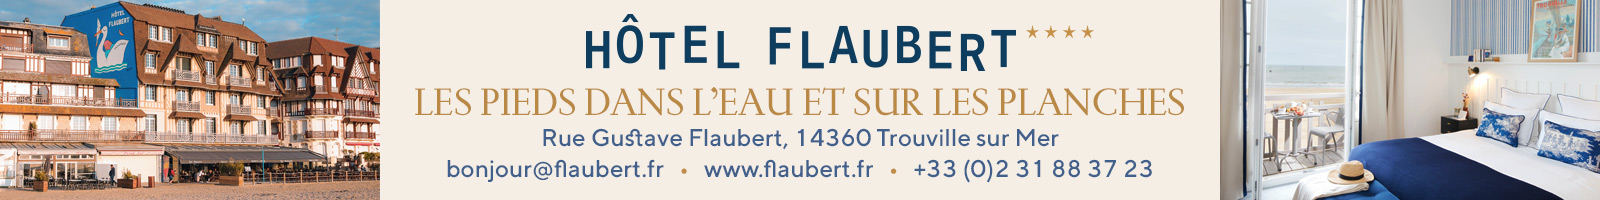 Hôtel Flaubert